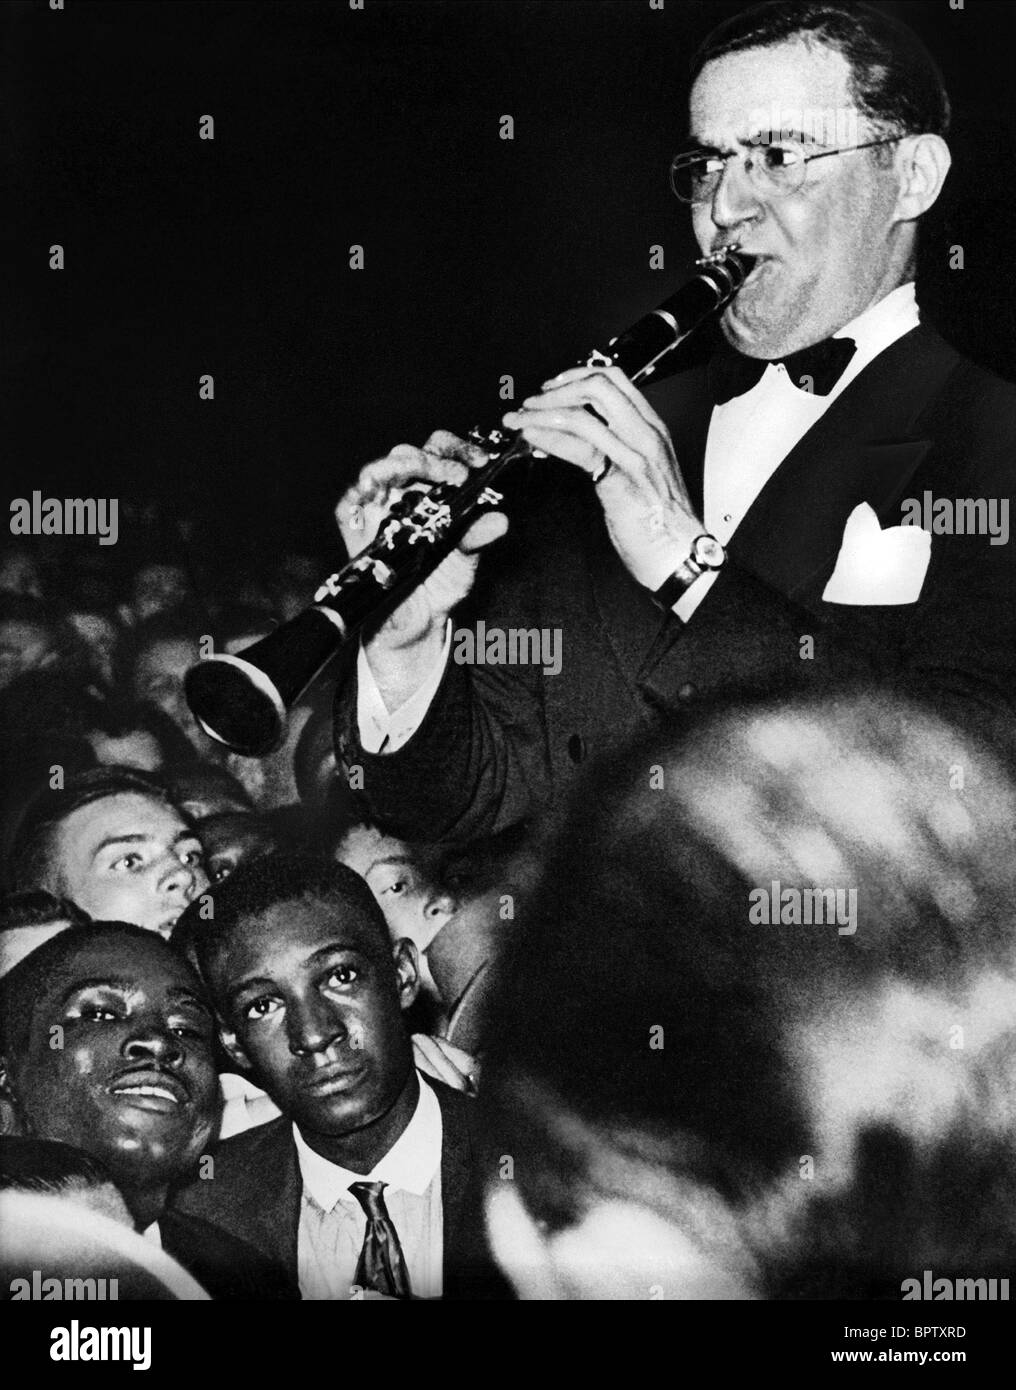 Musicien de jazz Benny Goodman (1944) Banque D'Images